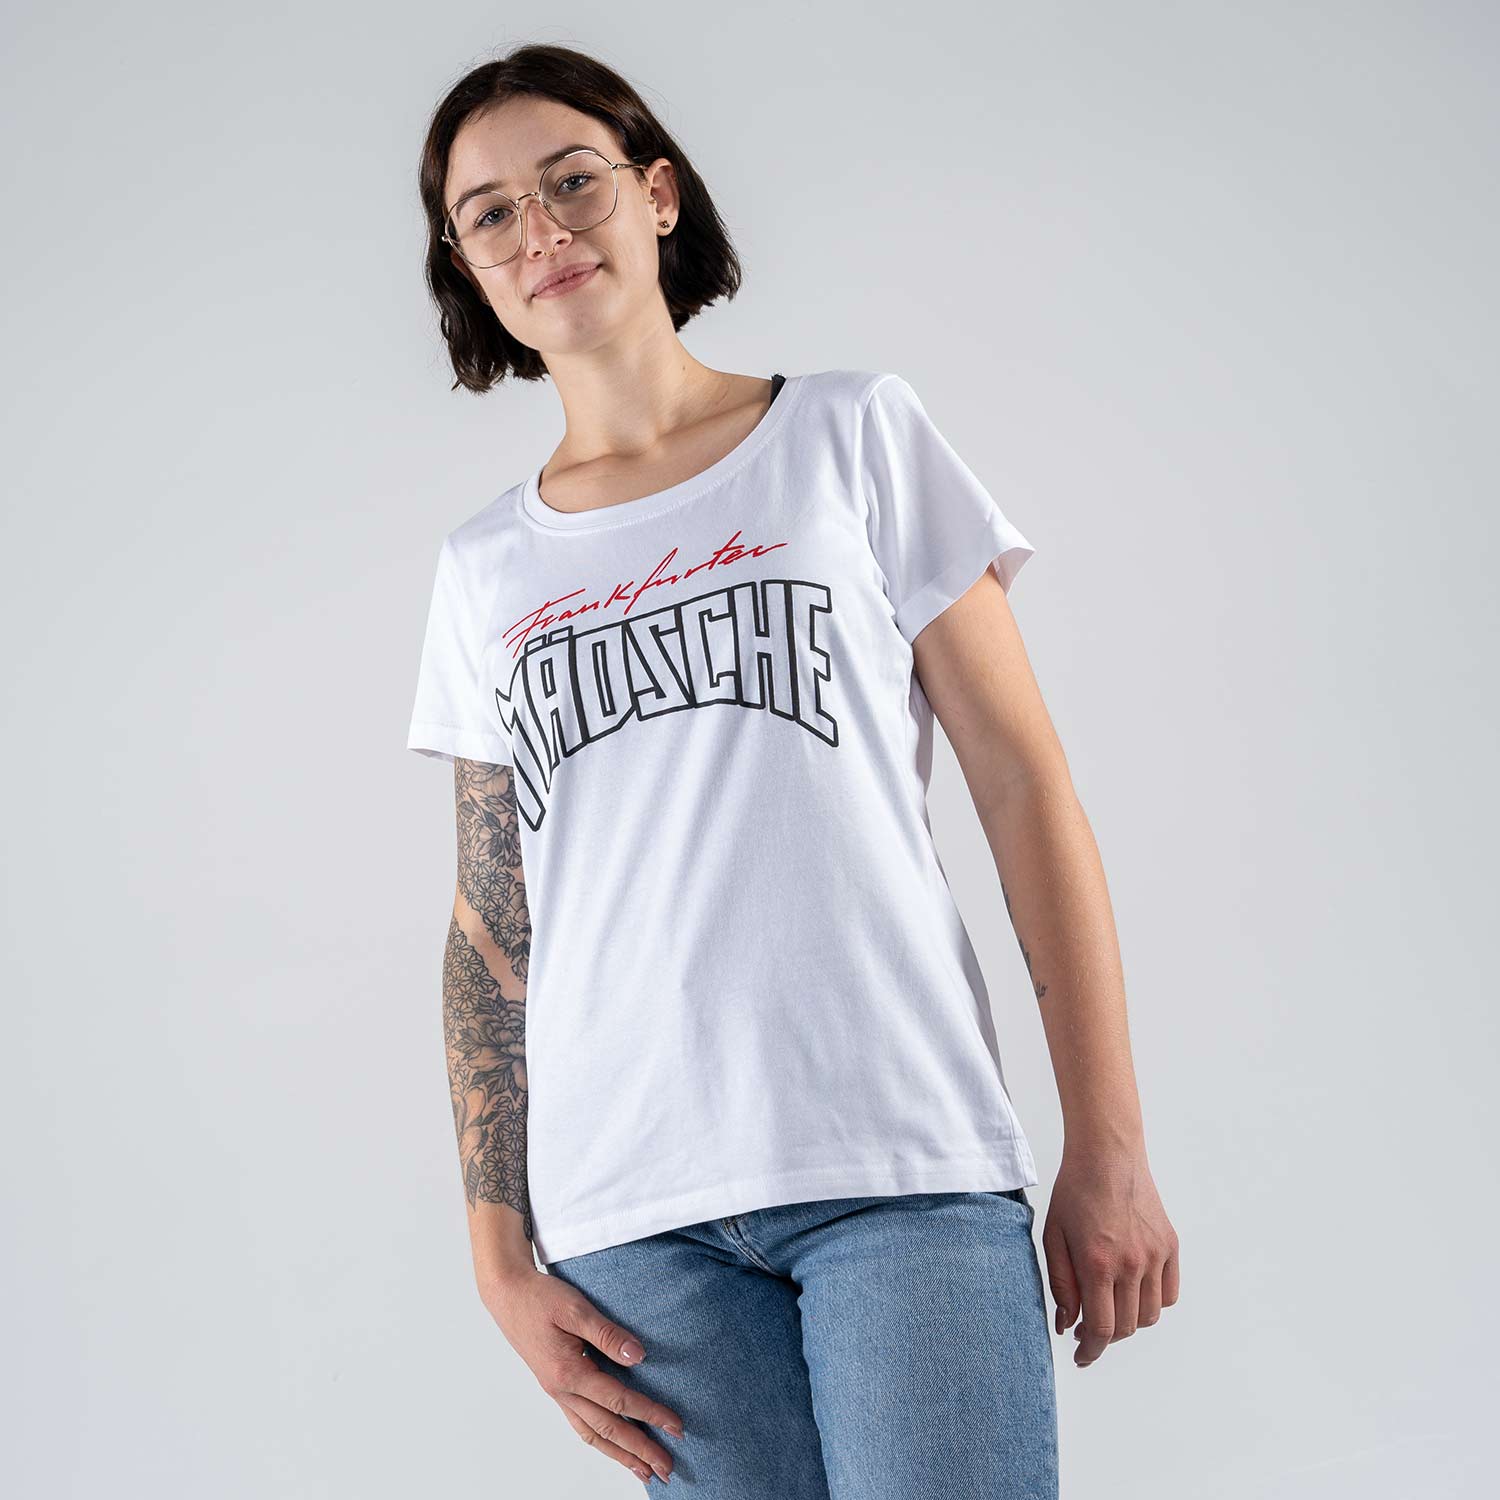 Bild 5: Damen T-Shirt Frankfurter Mädsche